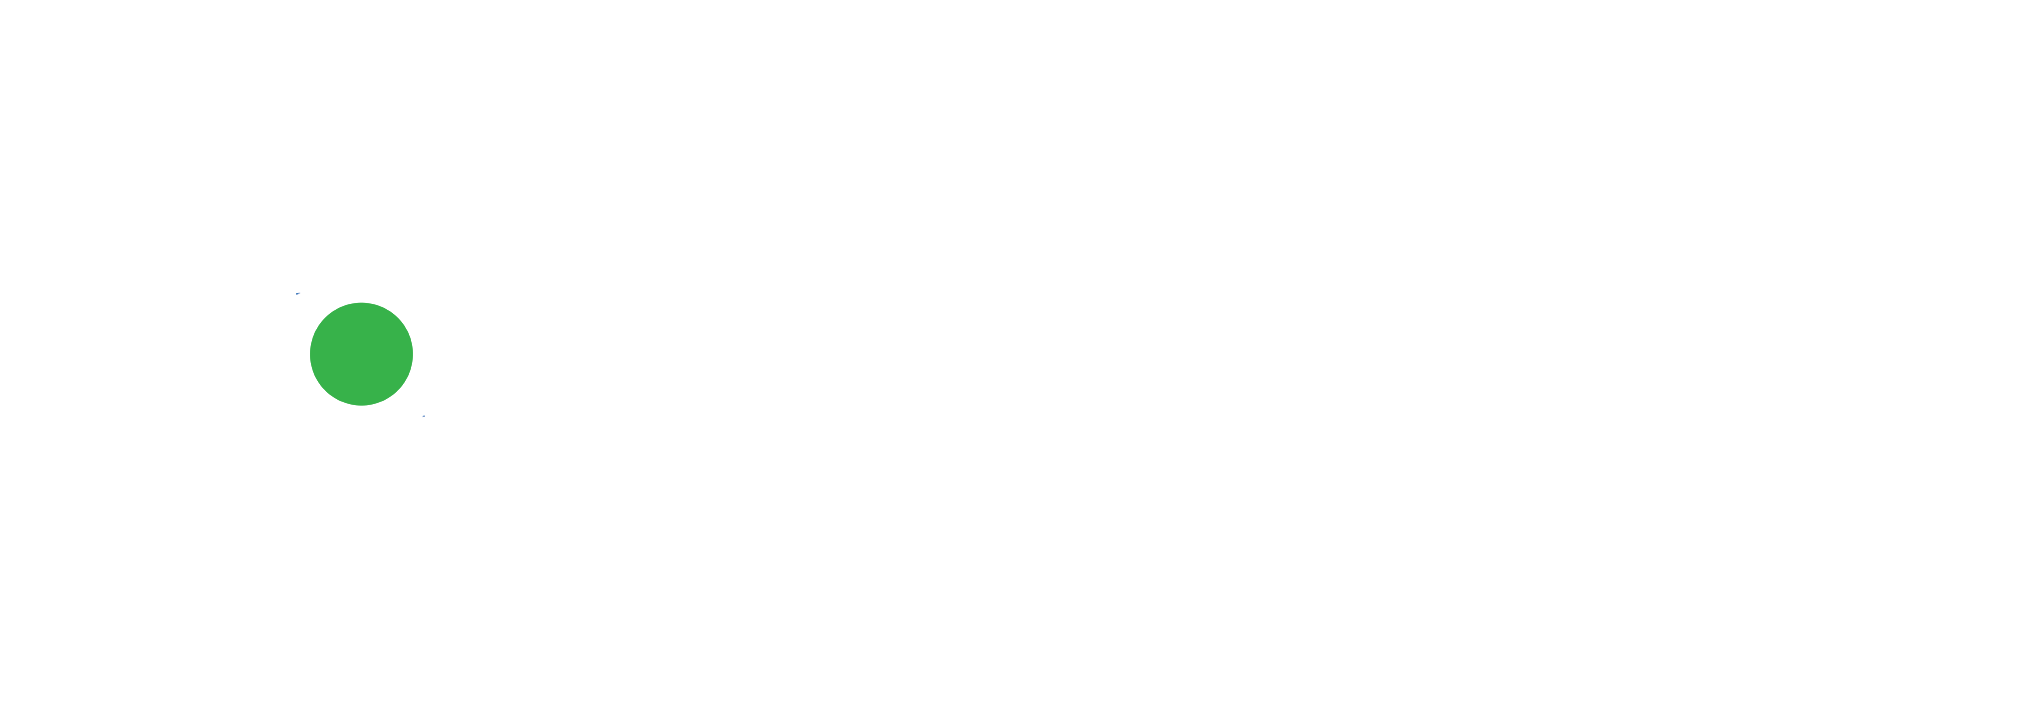 Inspctr